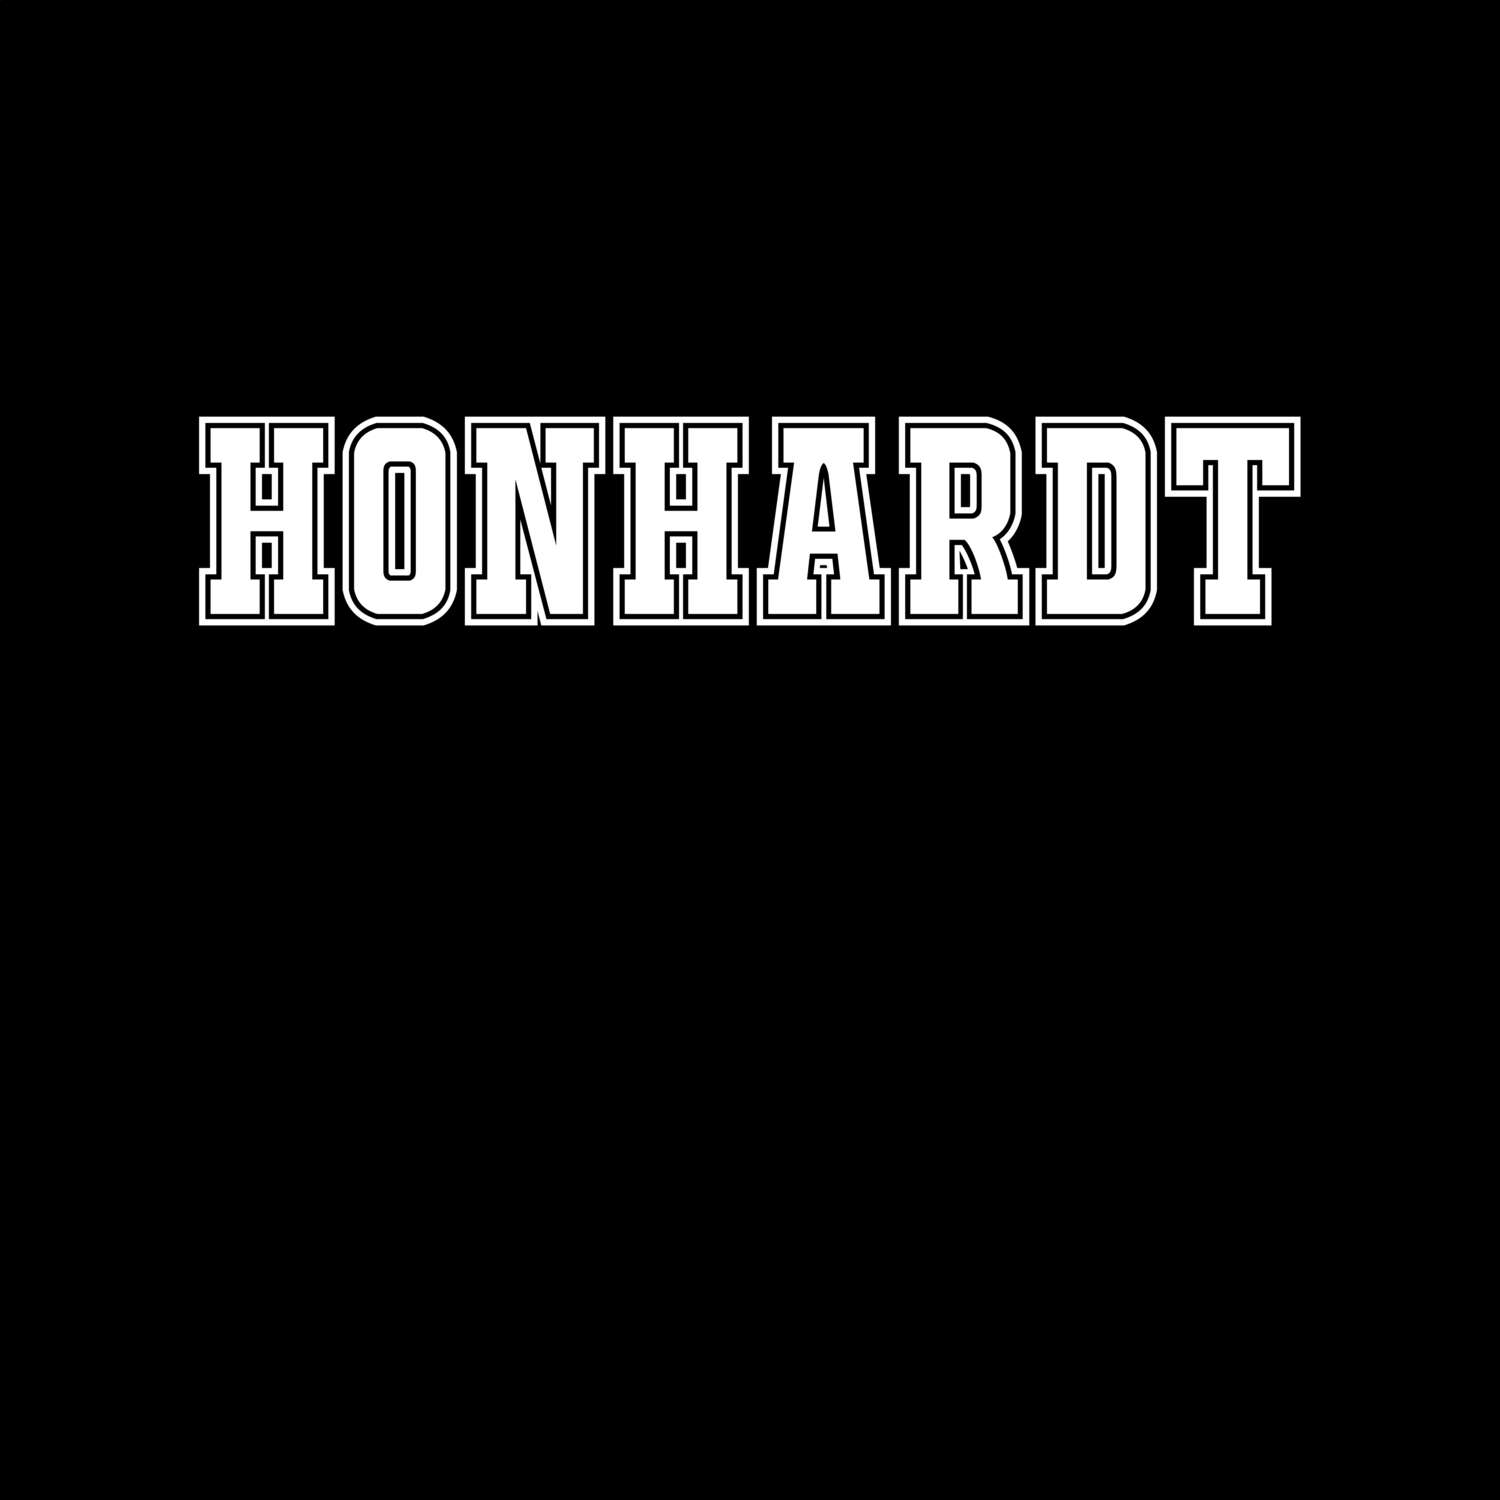 Honhardt T-Shirt »Classic«